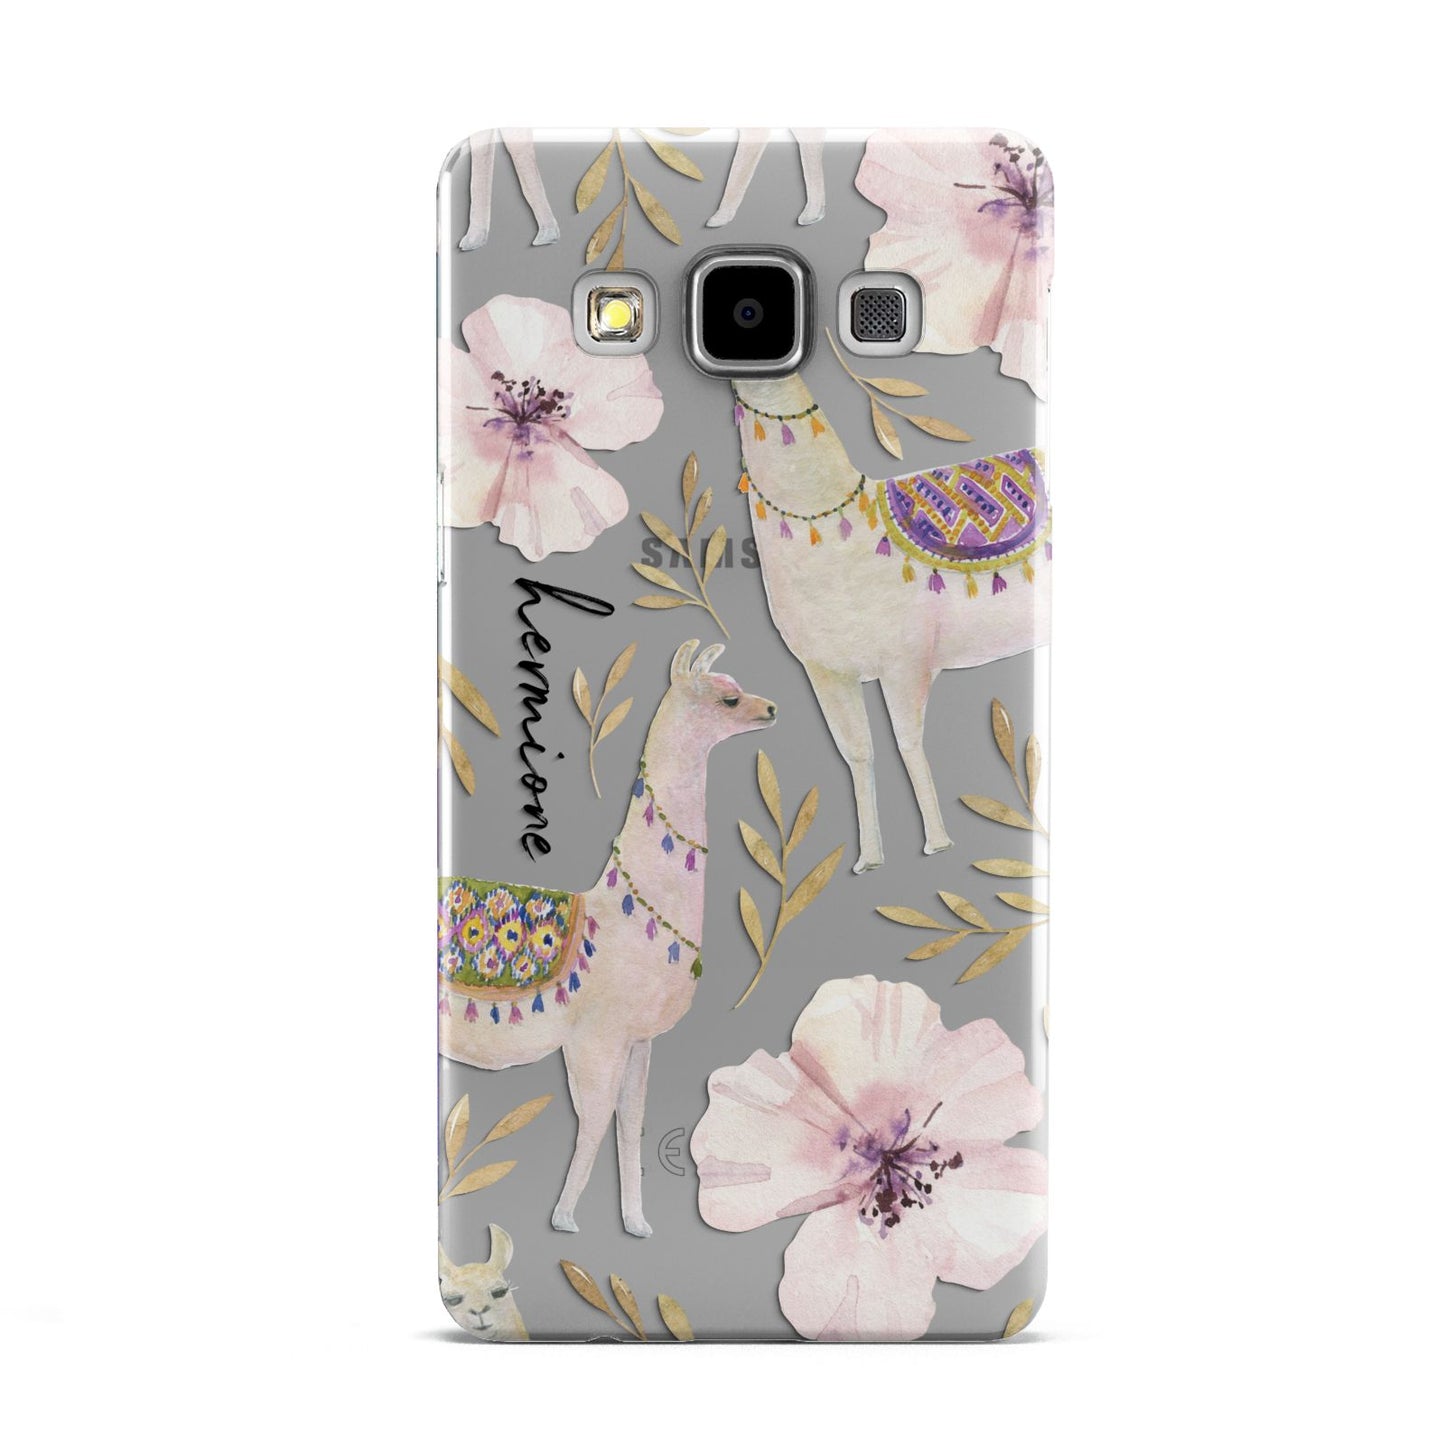 Personalised Llamas Samsung Galaxy A5 Case